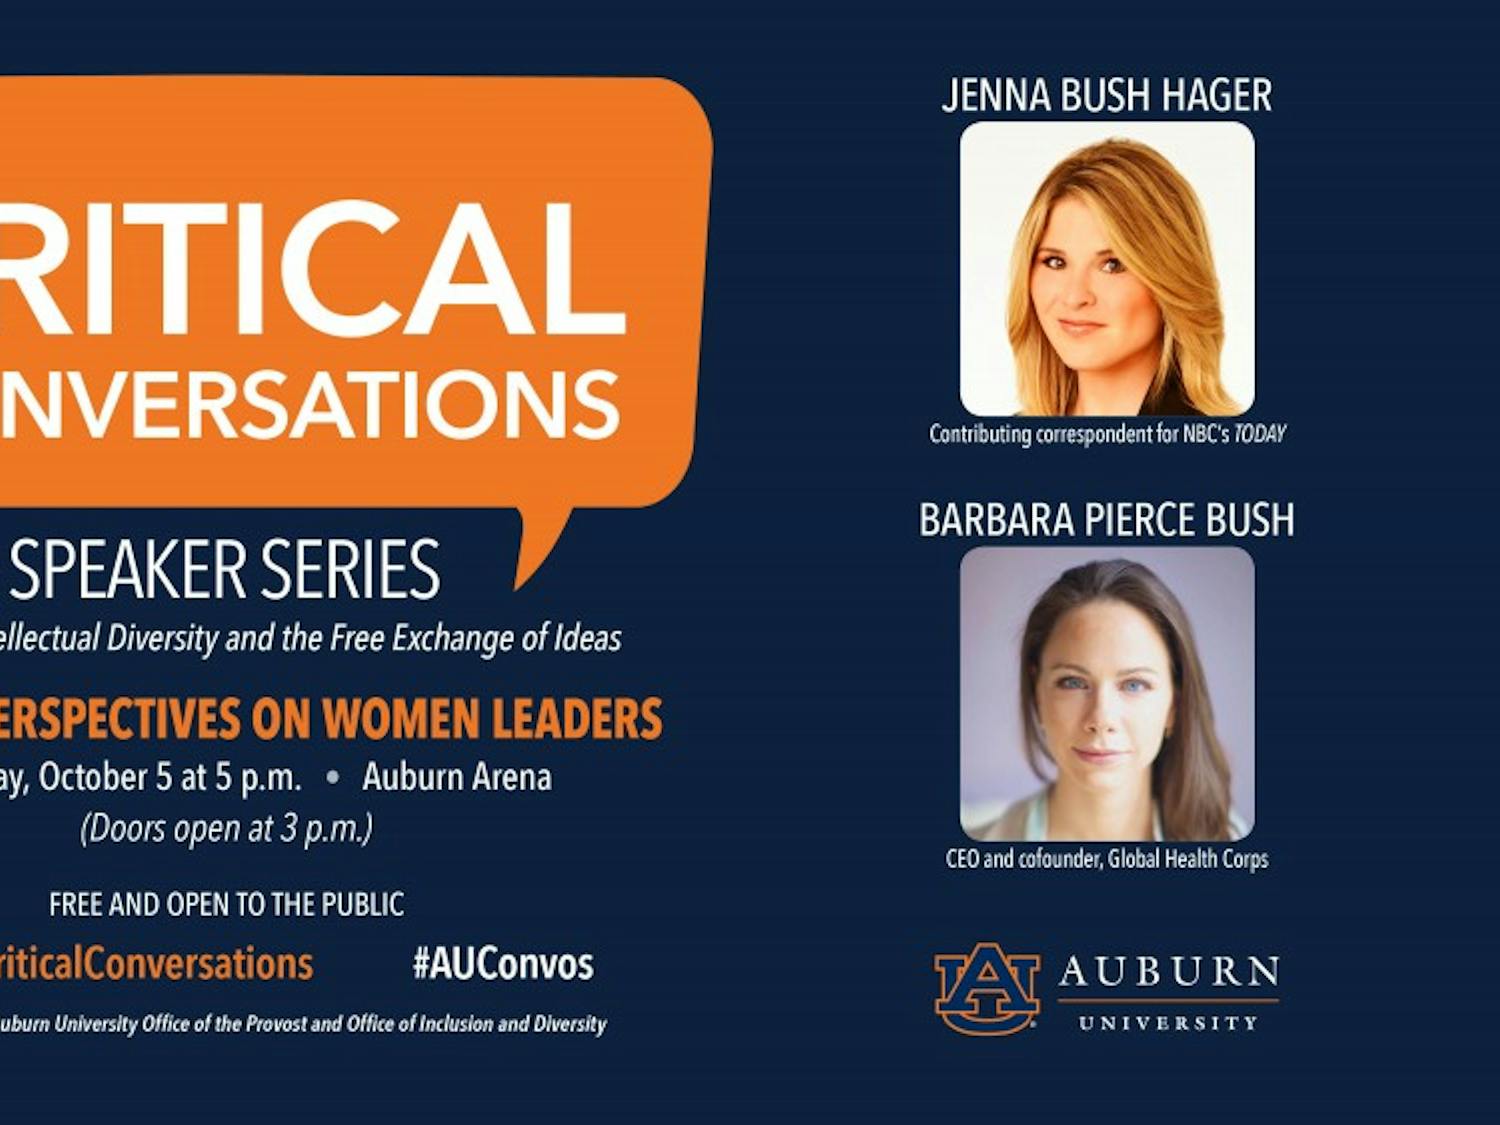 Critical Conversation Speaker Series, the Bush sisters